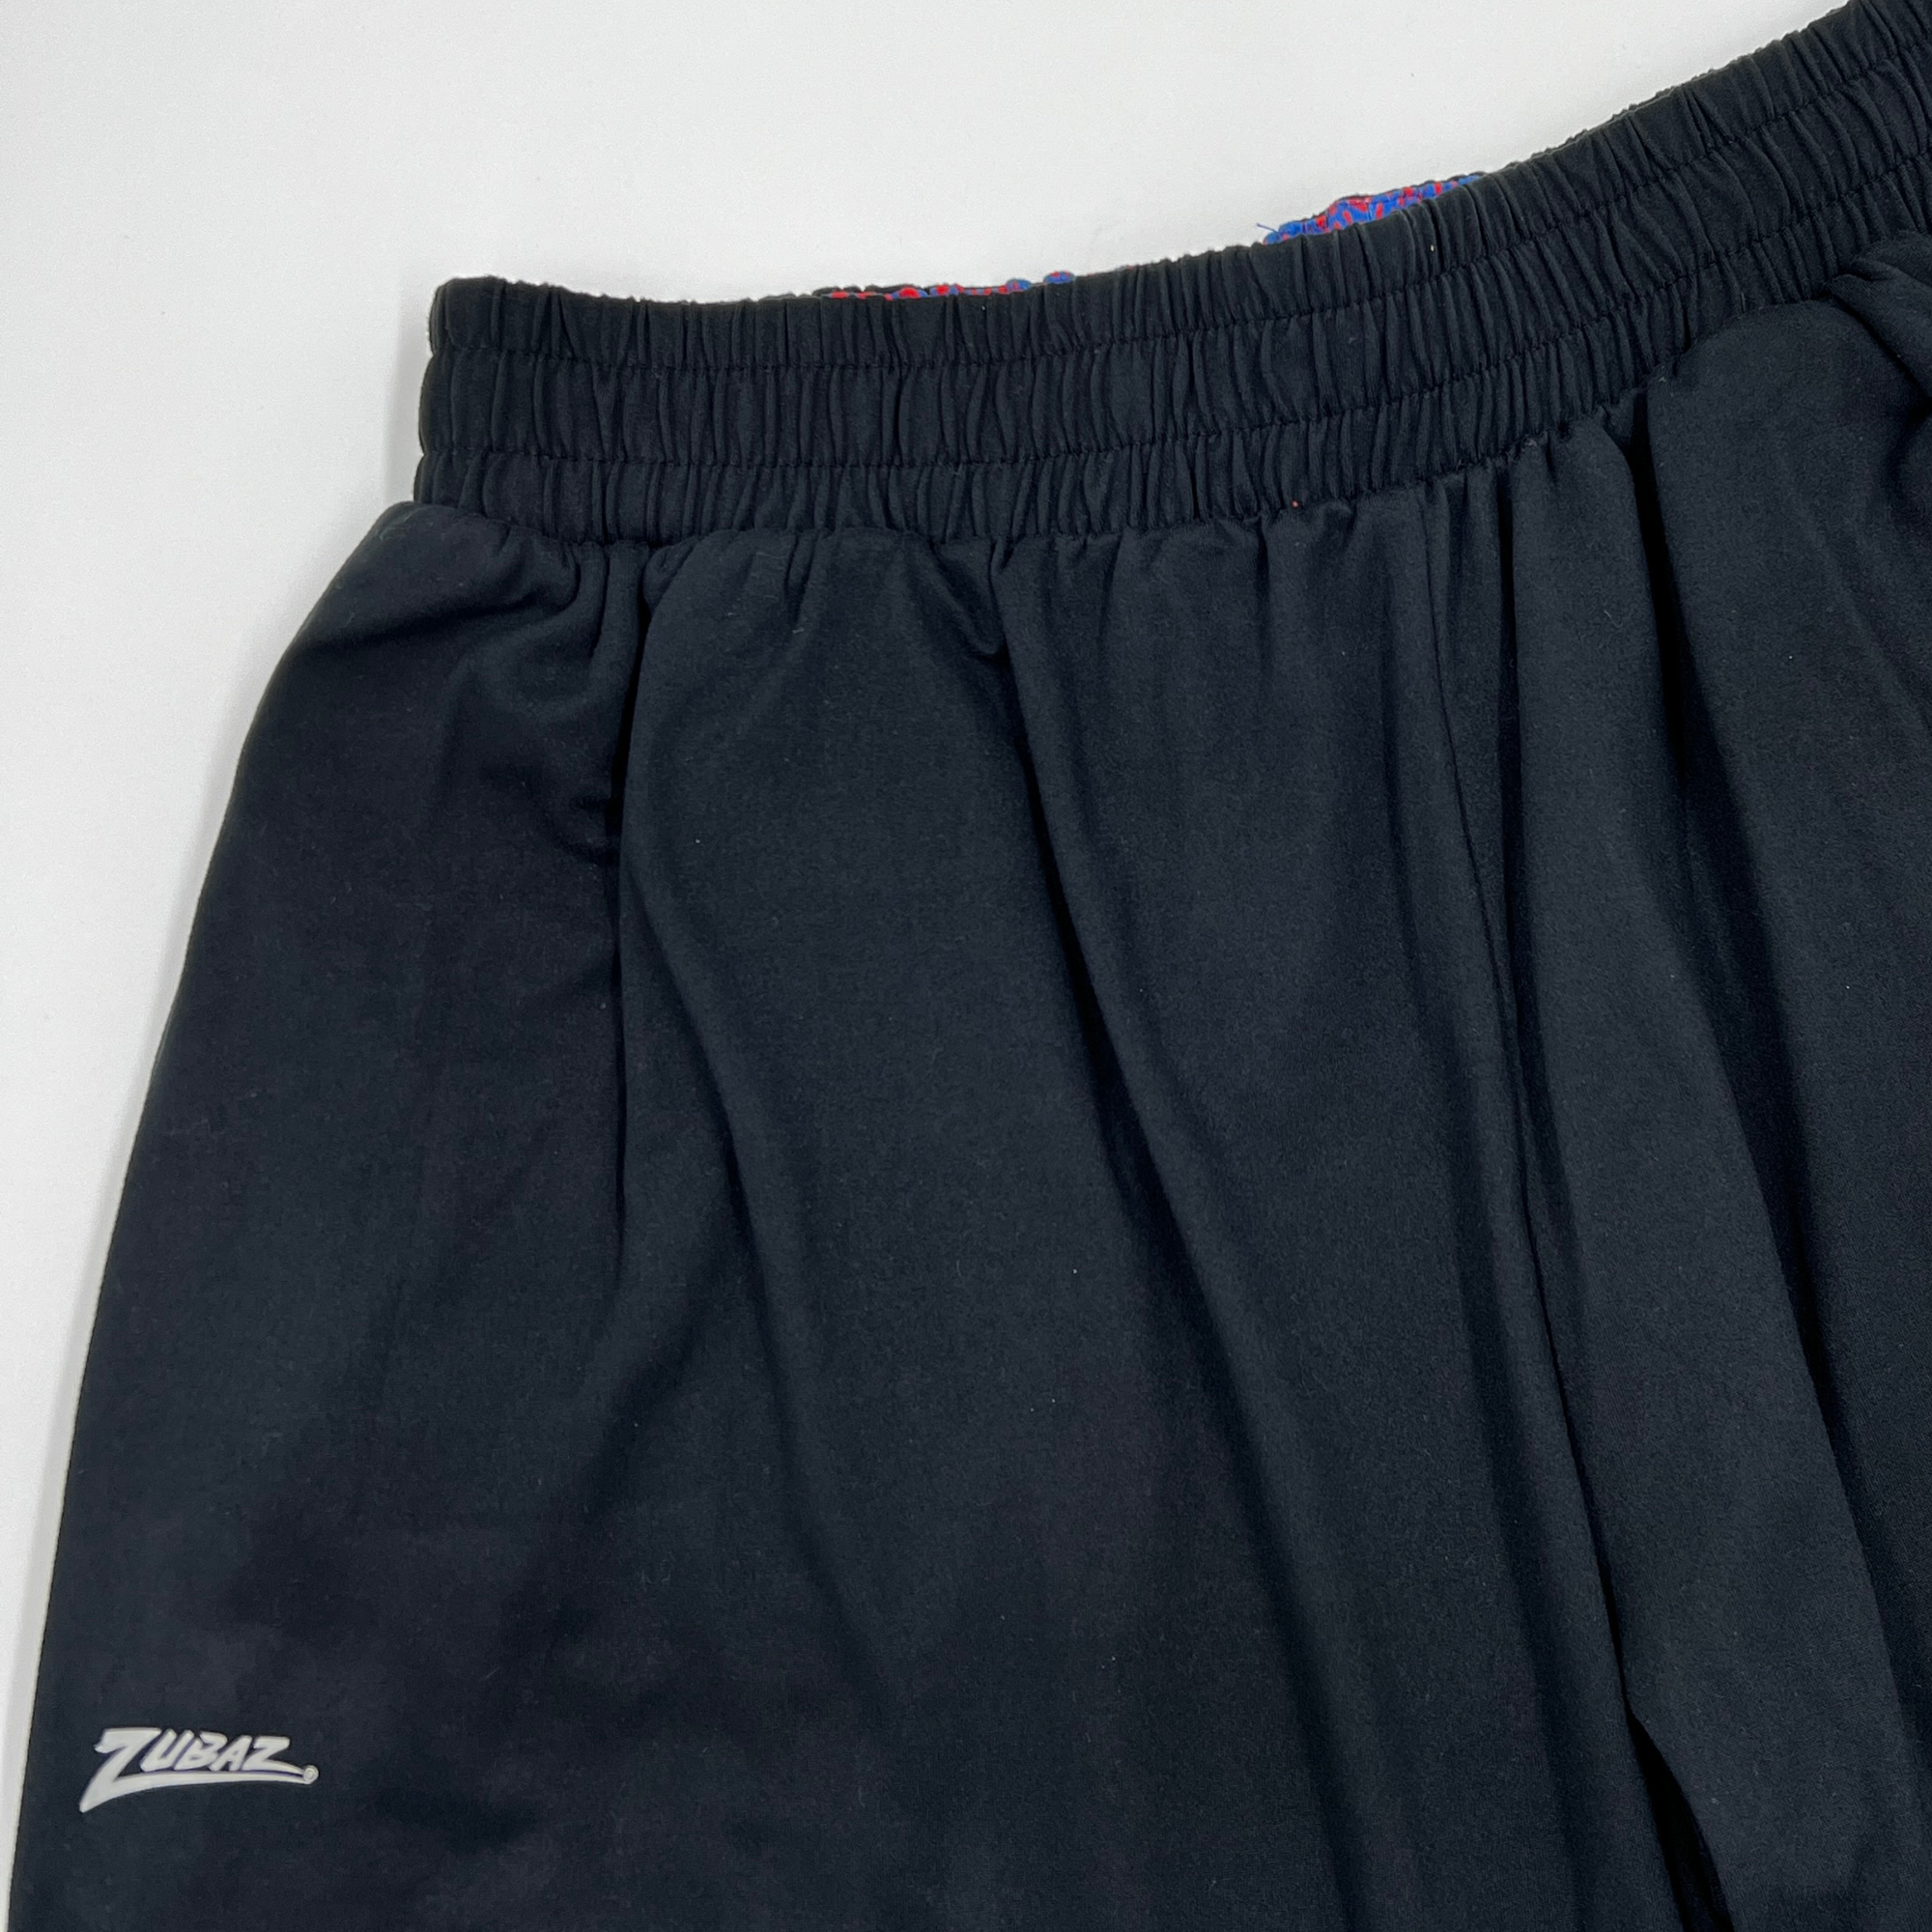 Zubaz Buffalo Bills Black With Red &amp; Blue Print Shorts